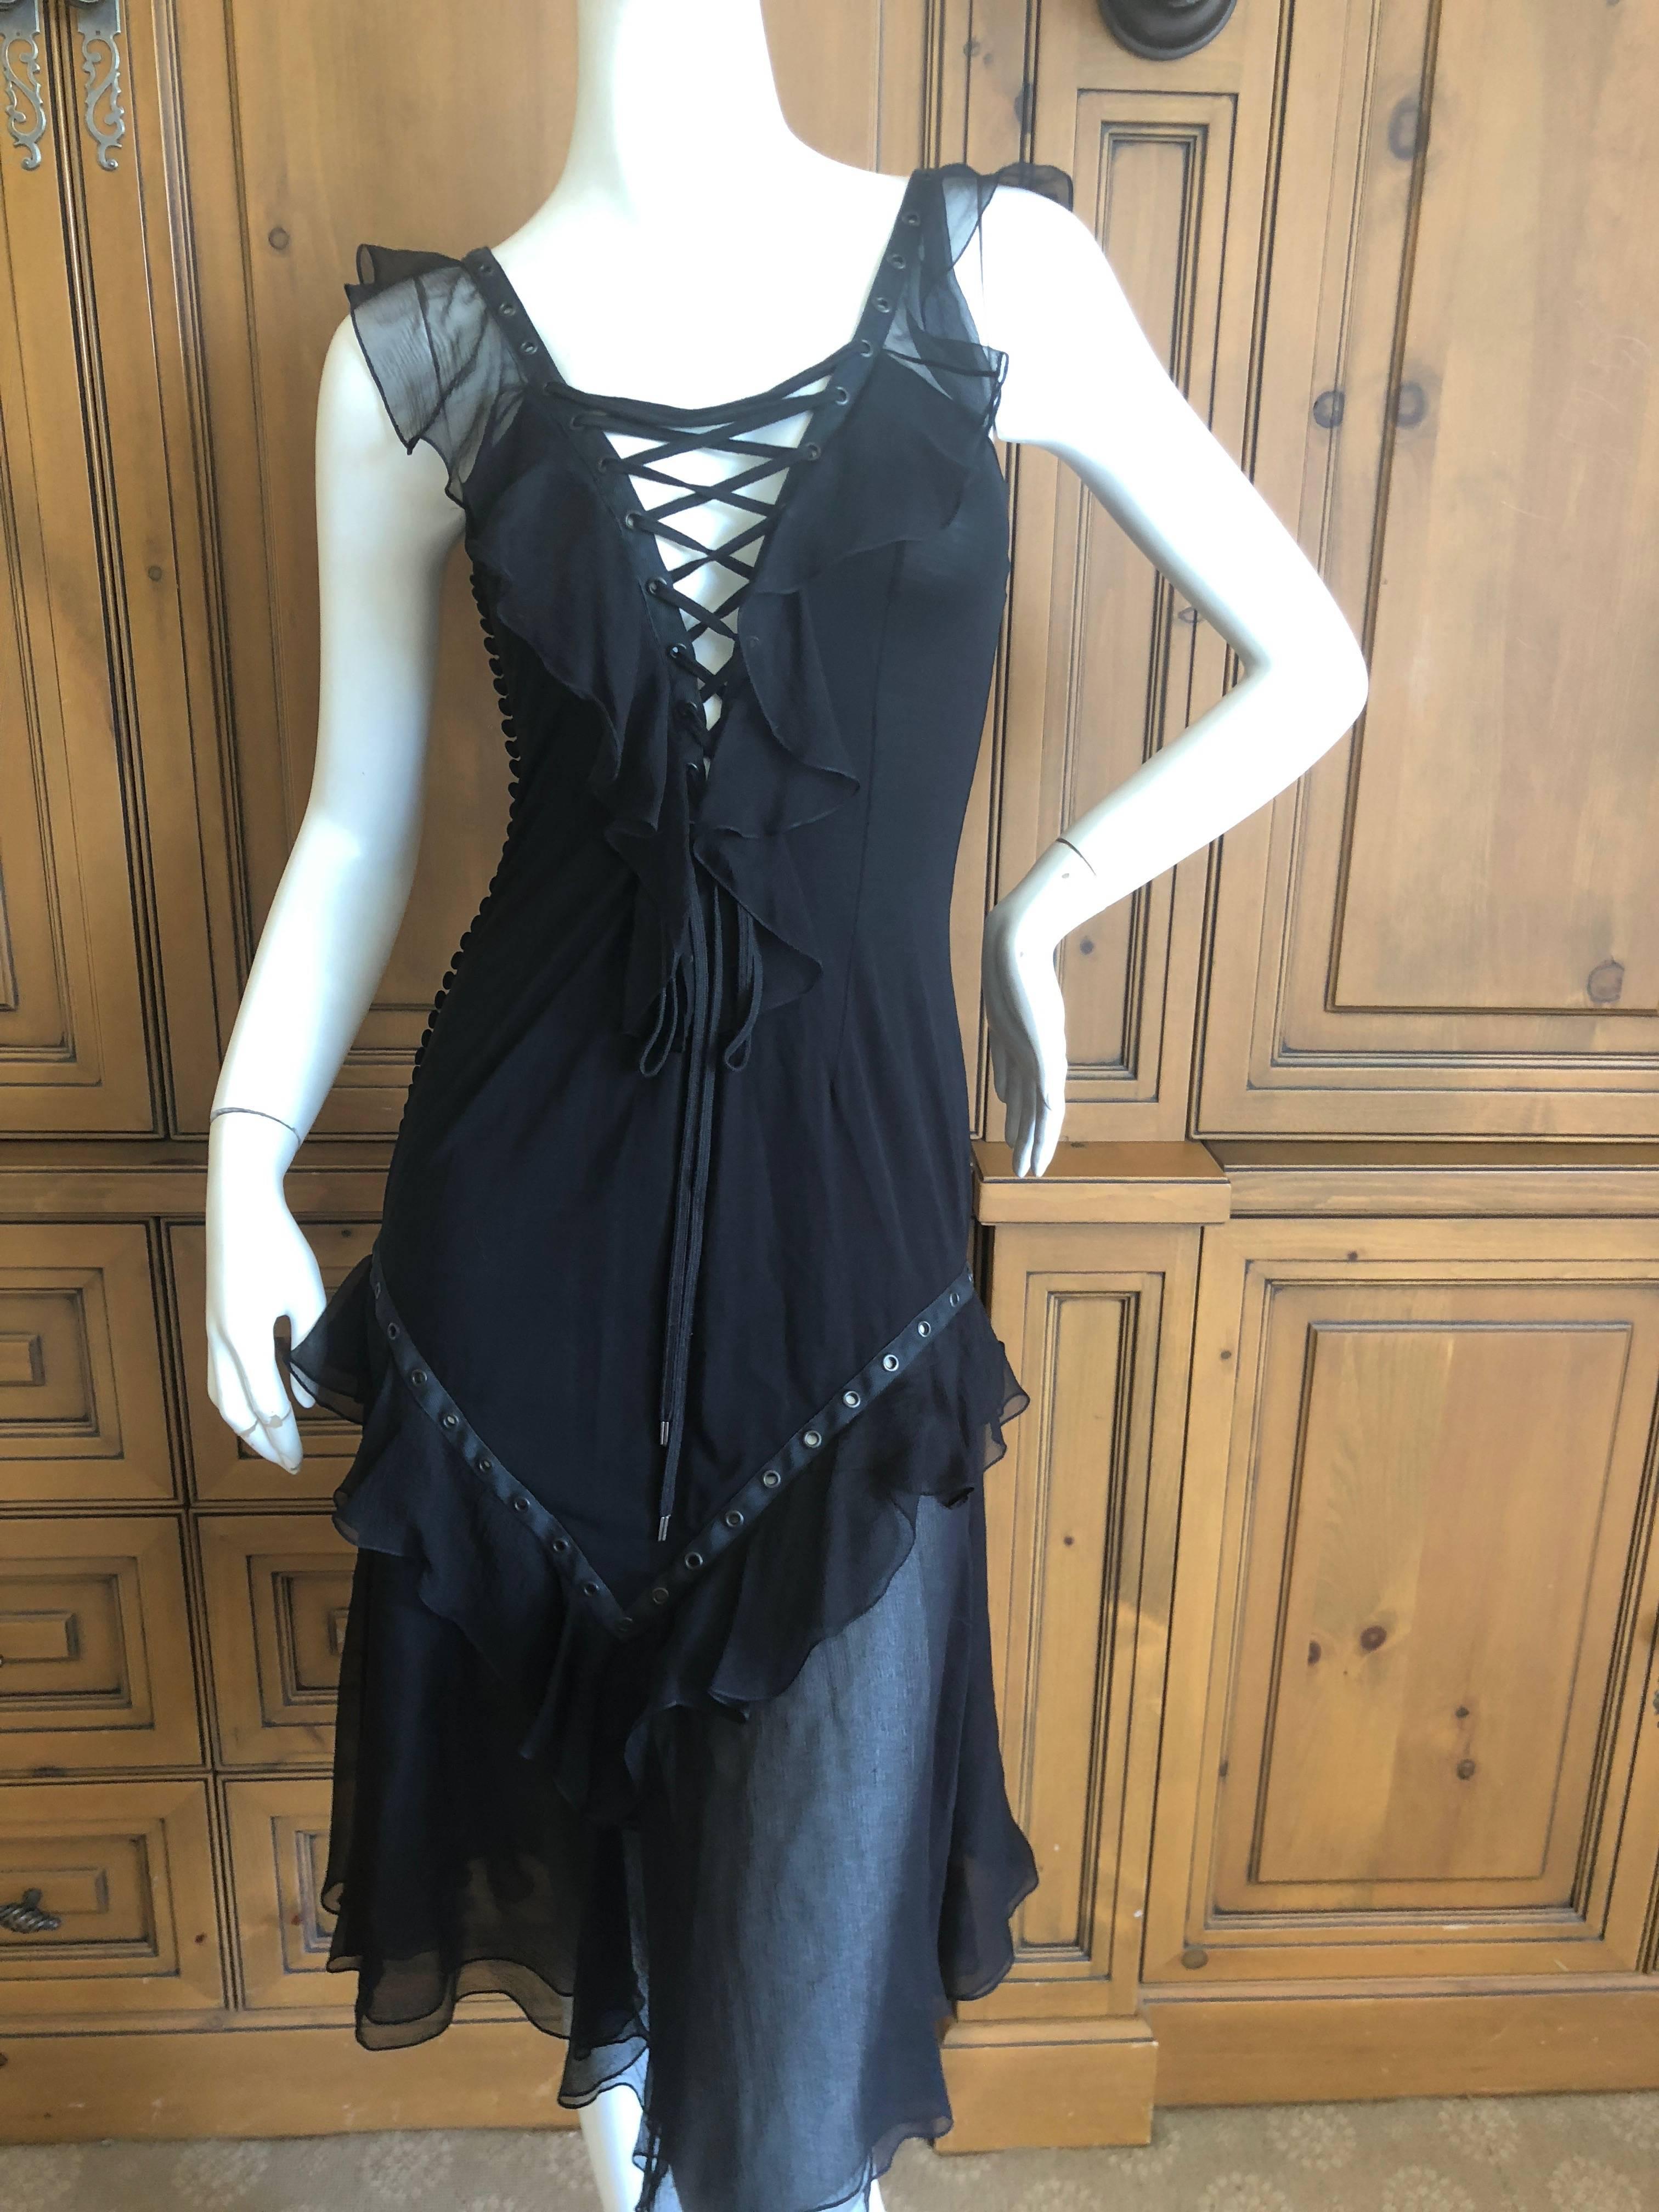 Christian Dior by John Galliano Black Silk Chiffon Corset Lace Ruffled Dress
Size 40
Bust 36